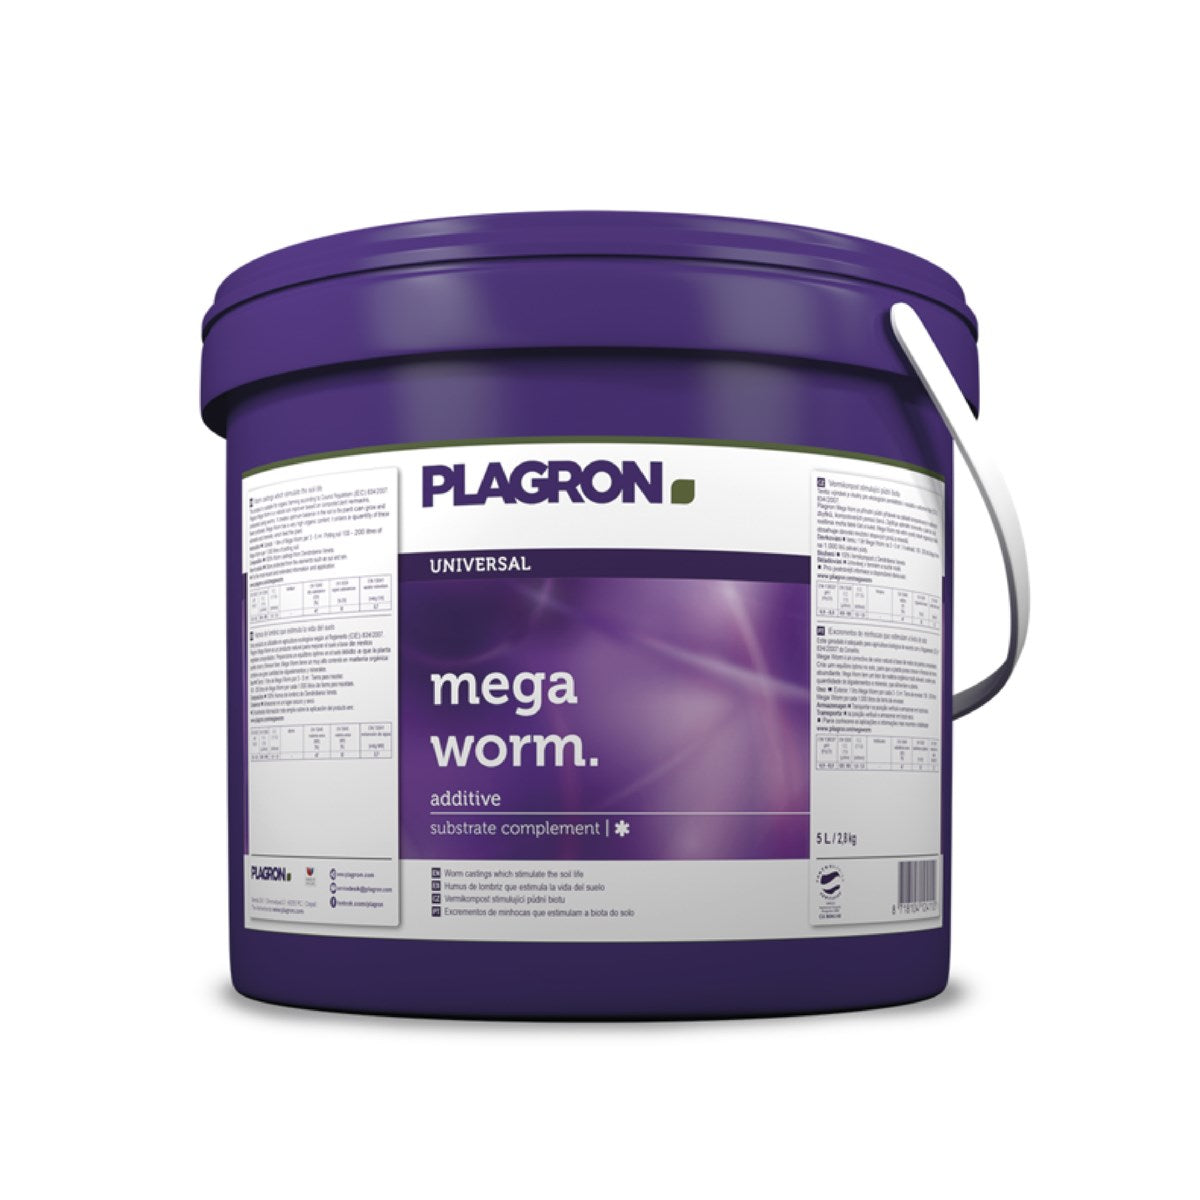 Megaworm van Plagron